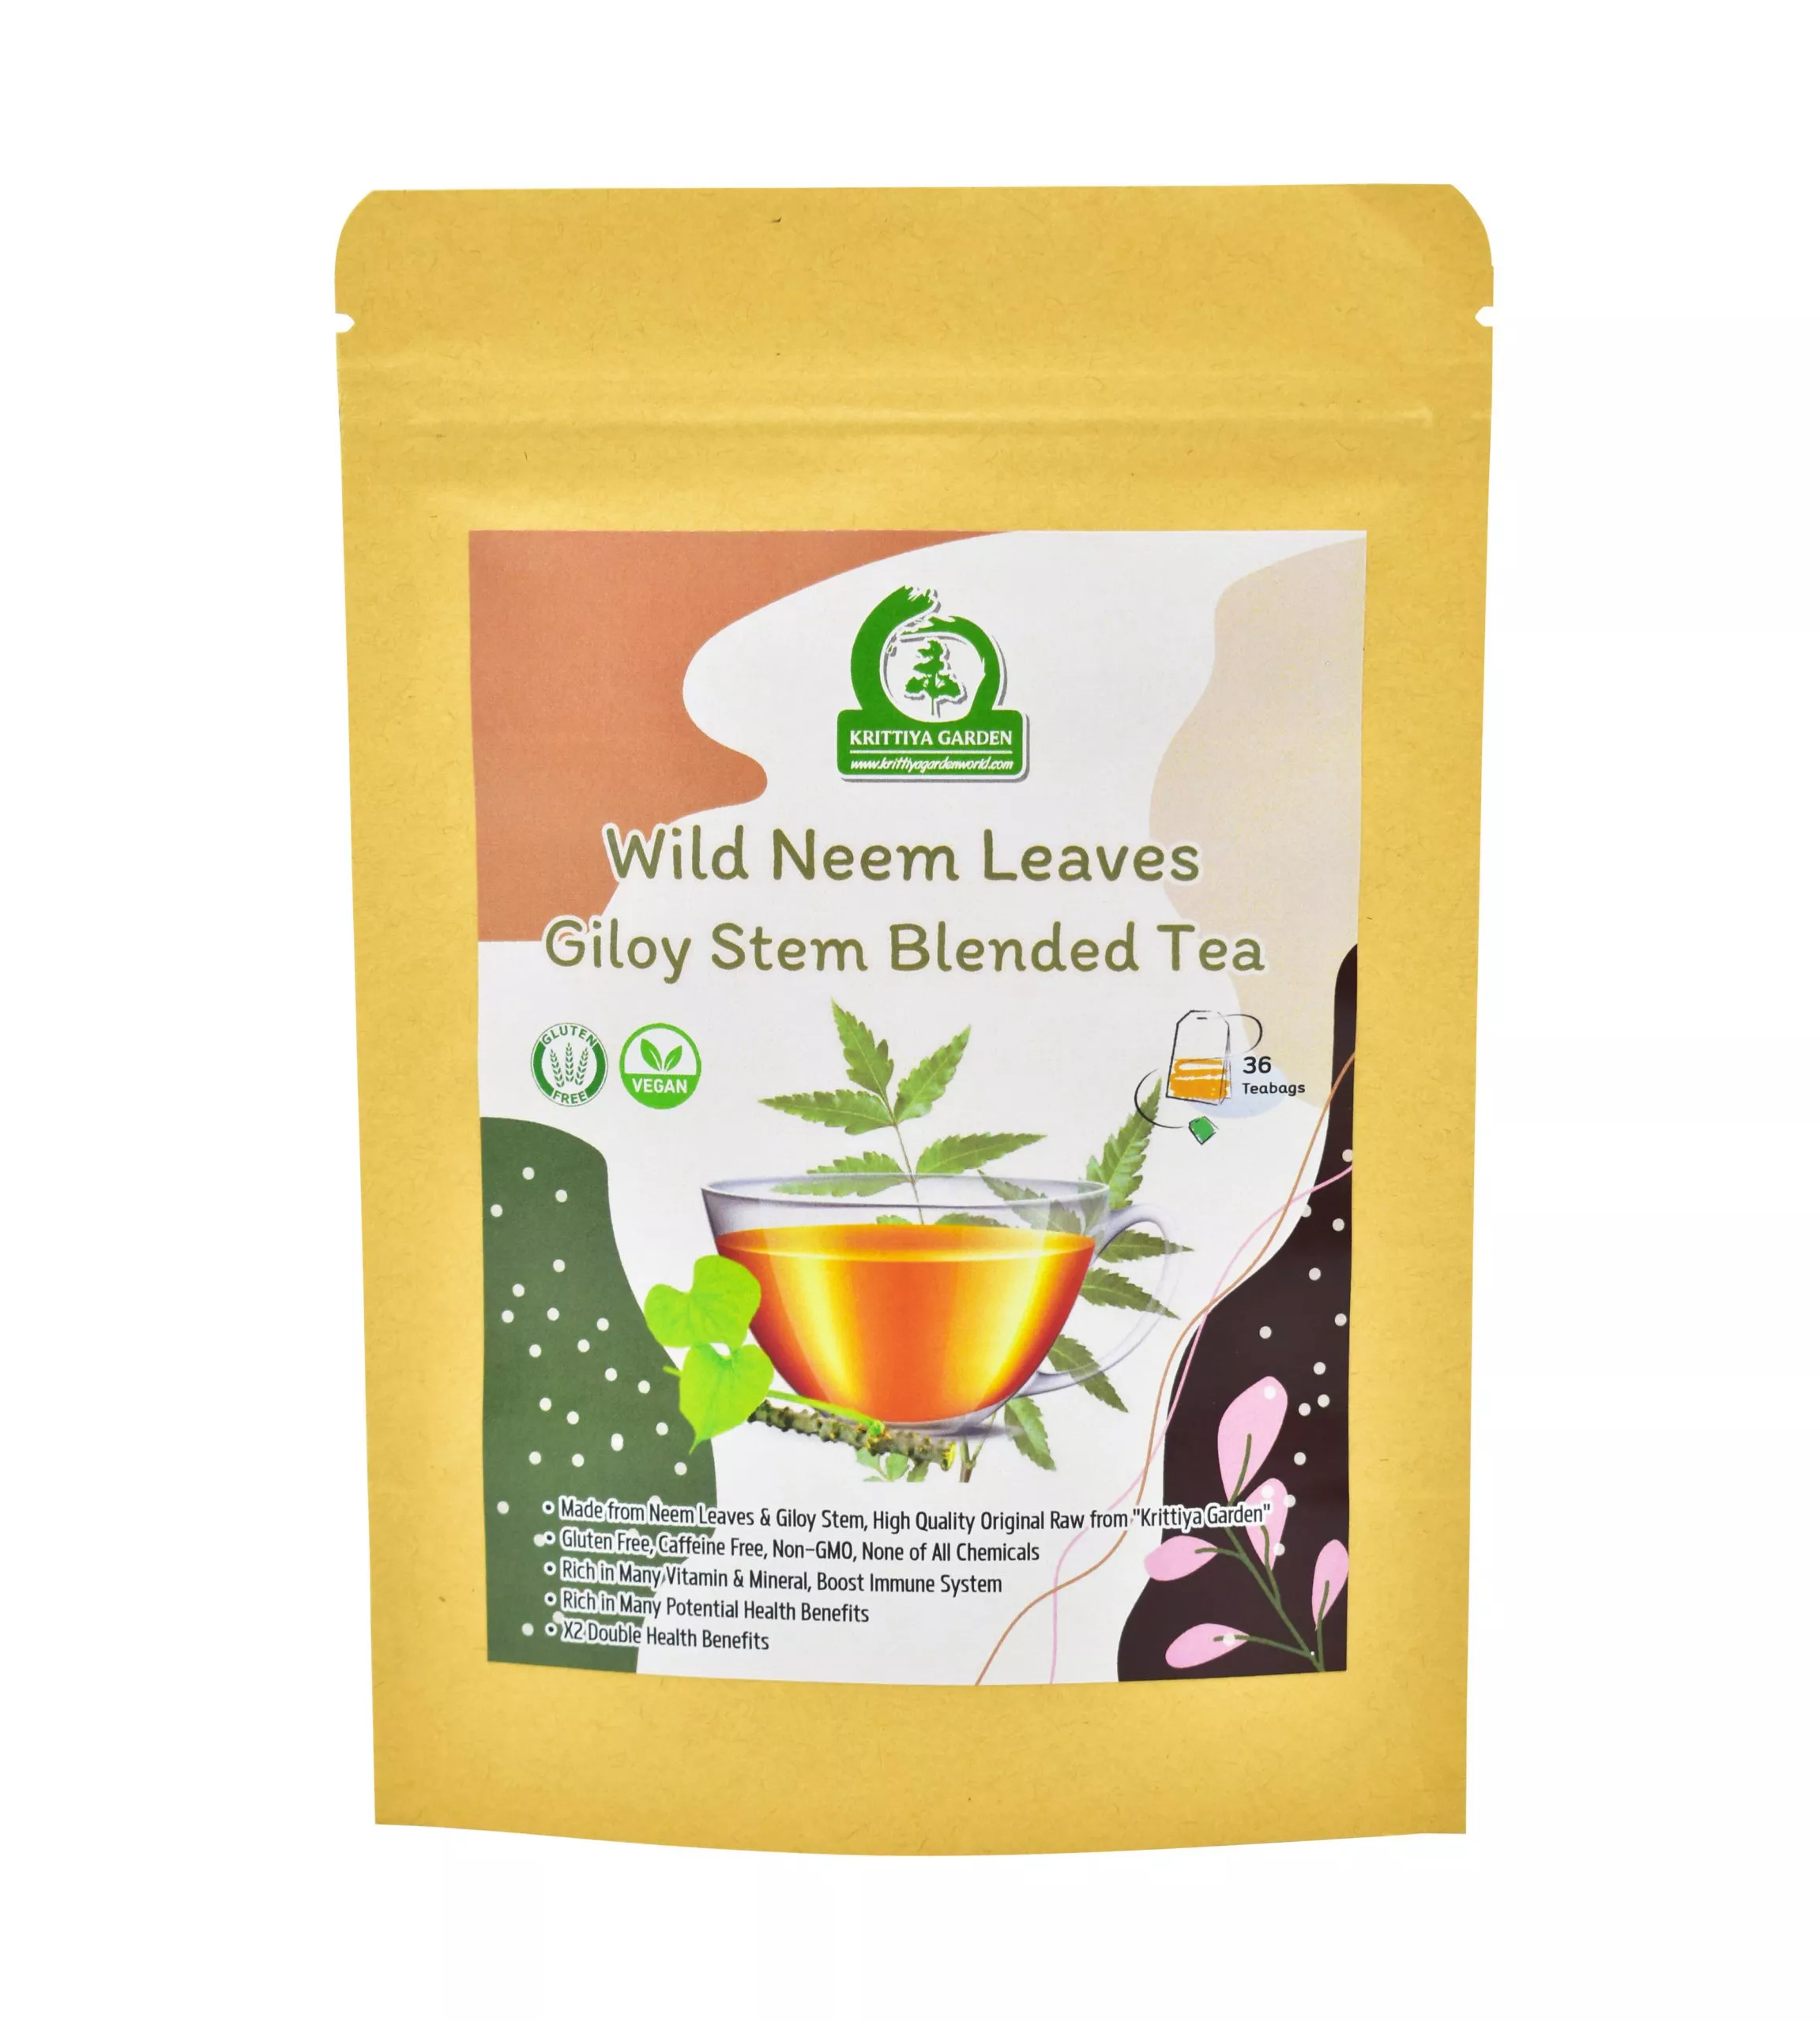 Wild Neem Leaves Giloy Stem Blended Tea Front